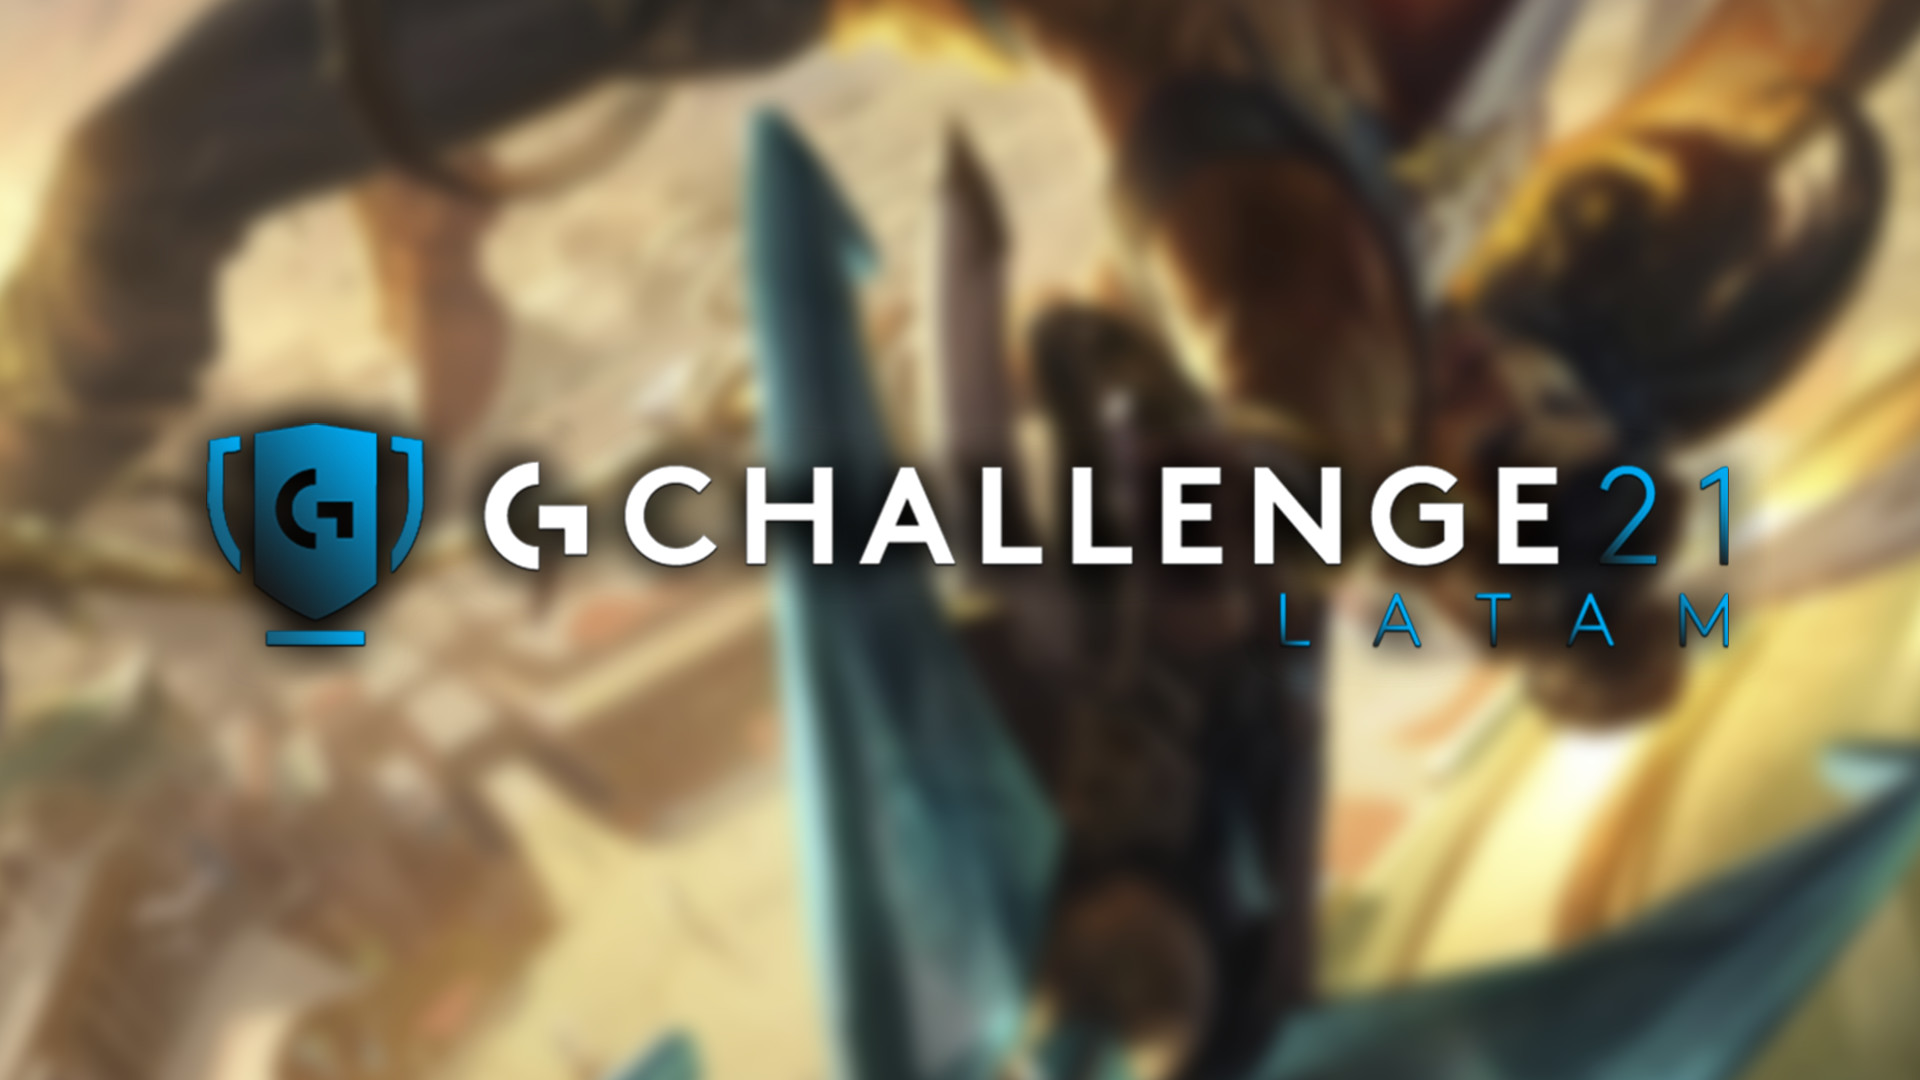 Logitech G Challenge